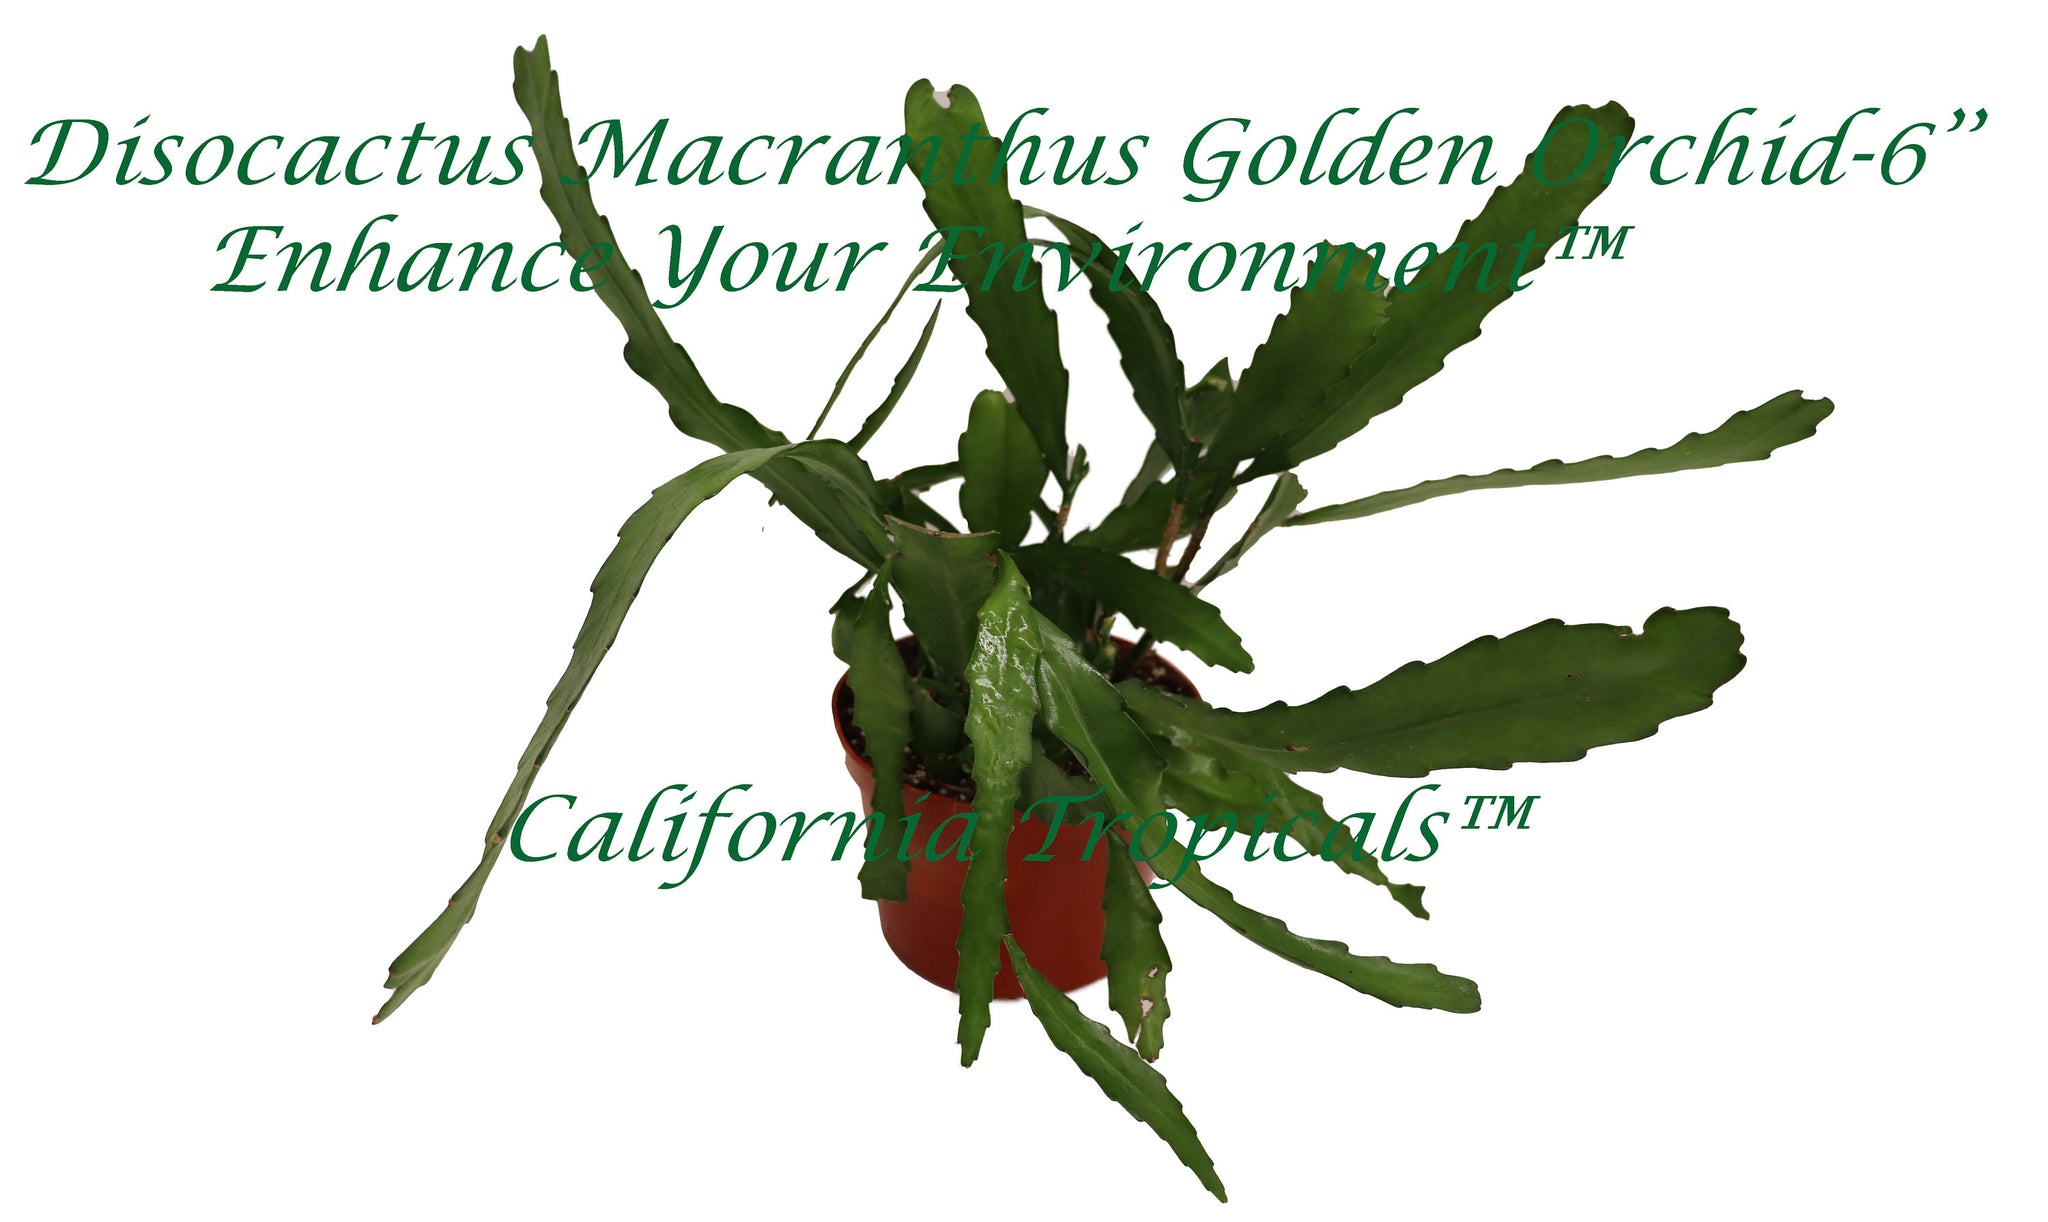 Golden Orchid-6'' California Tropicals